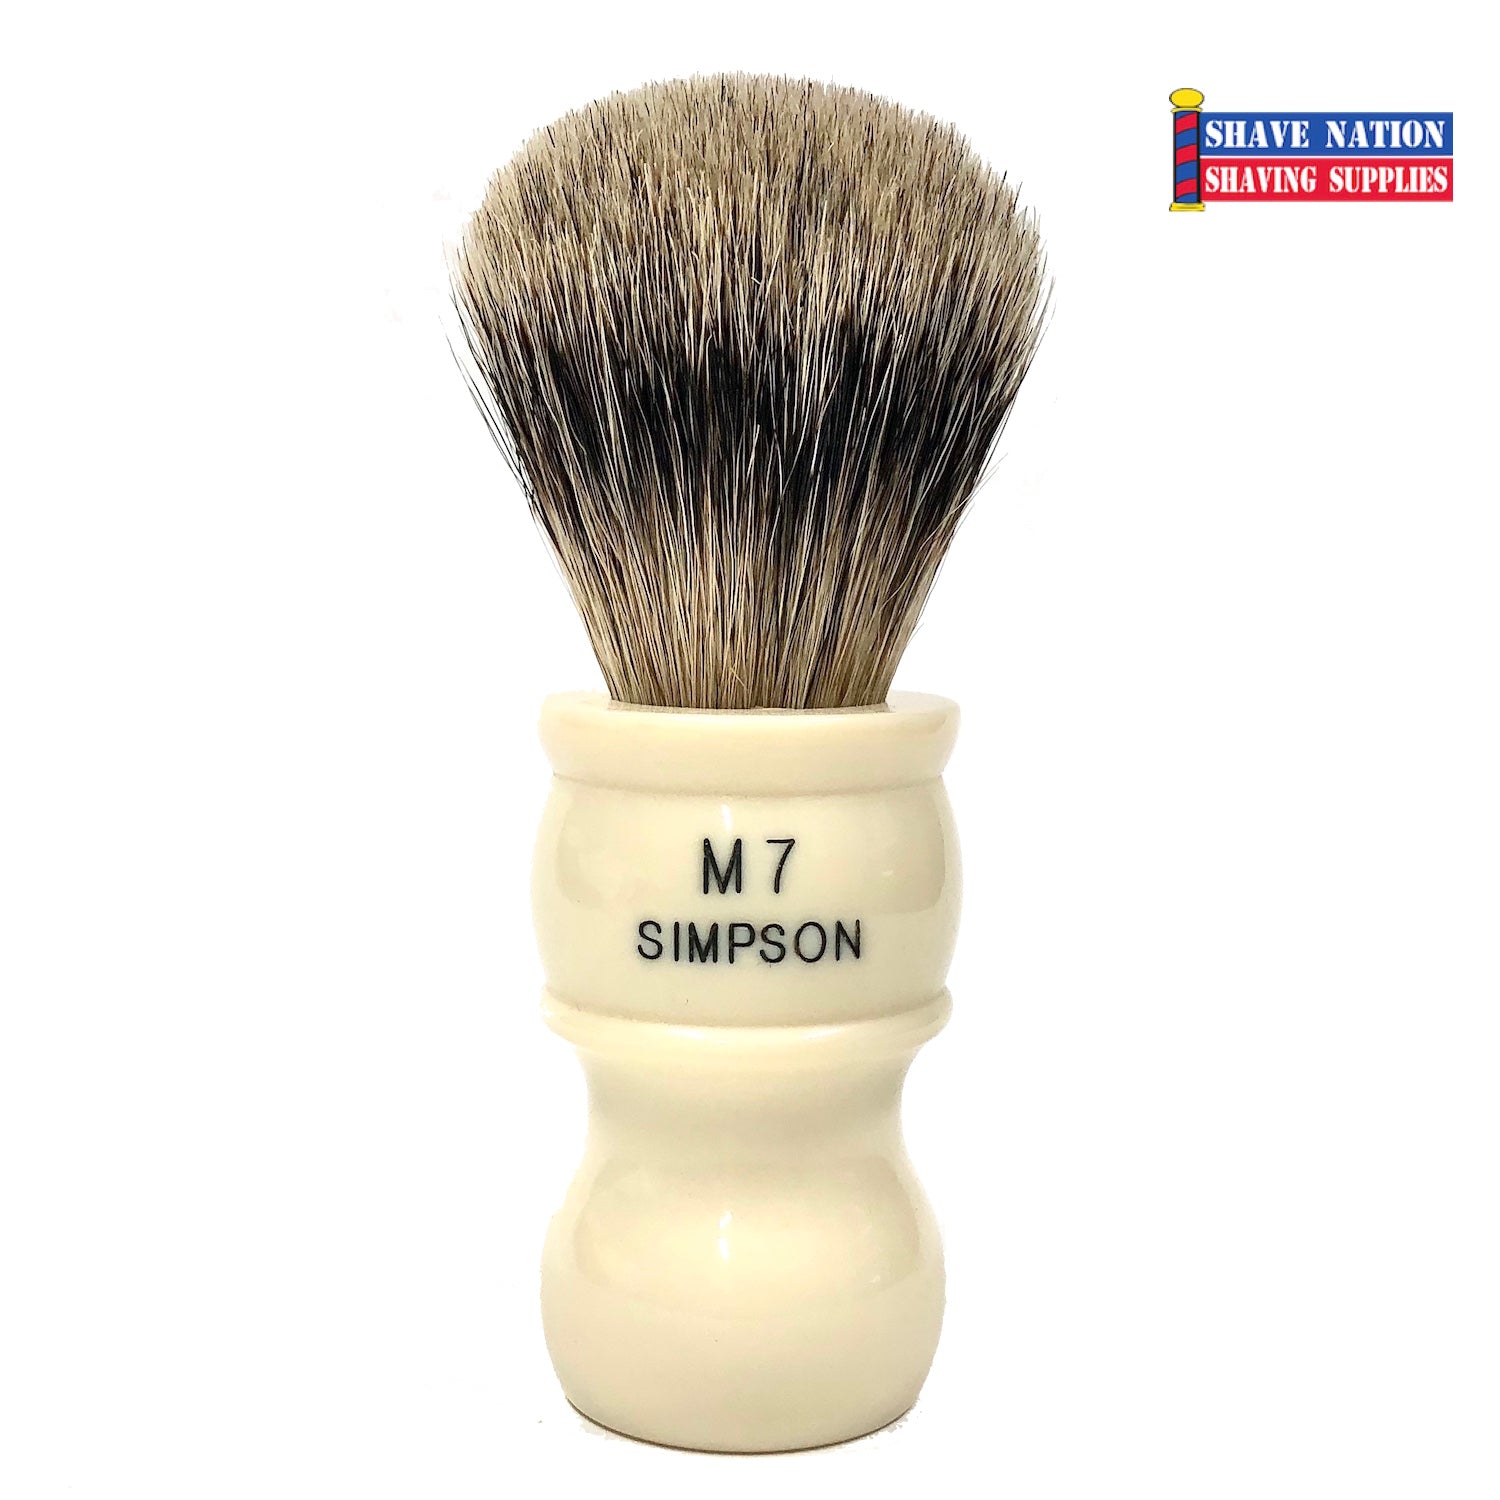 Simpsons M7 Best Badger Shaving Brush Ivory Handle